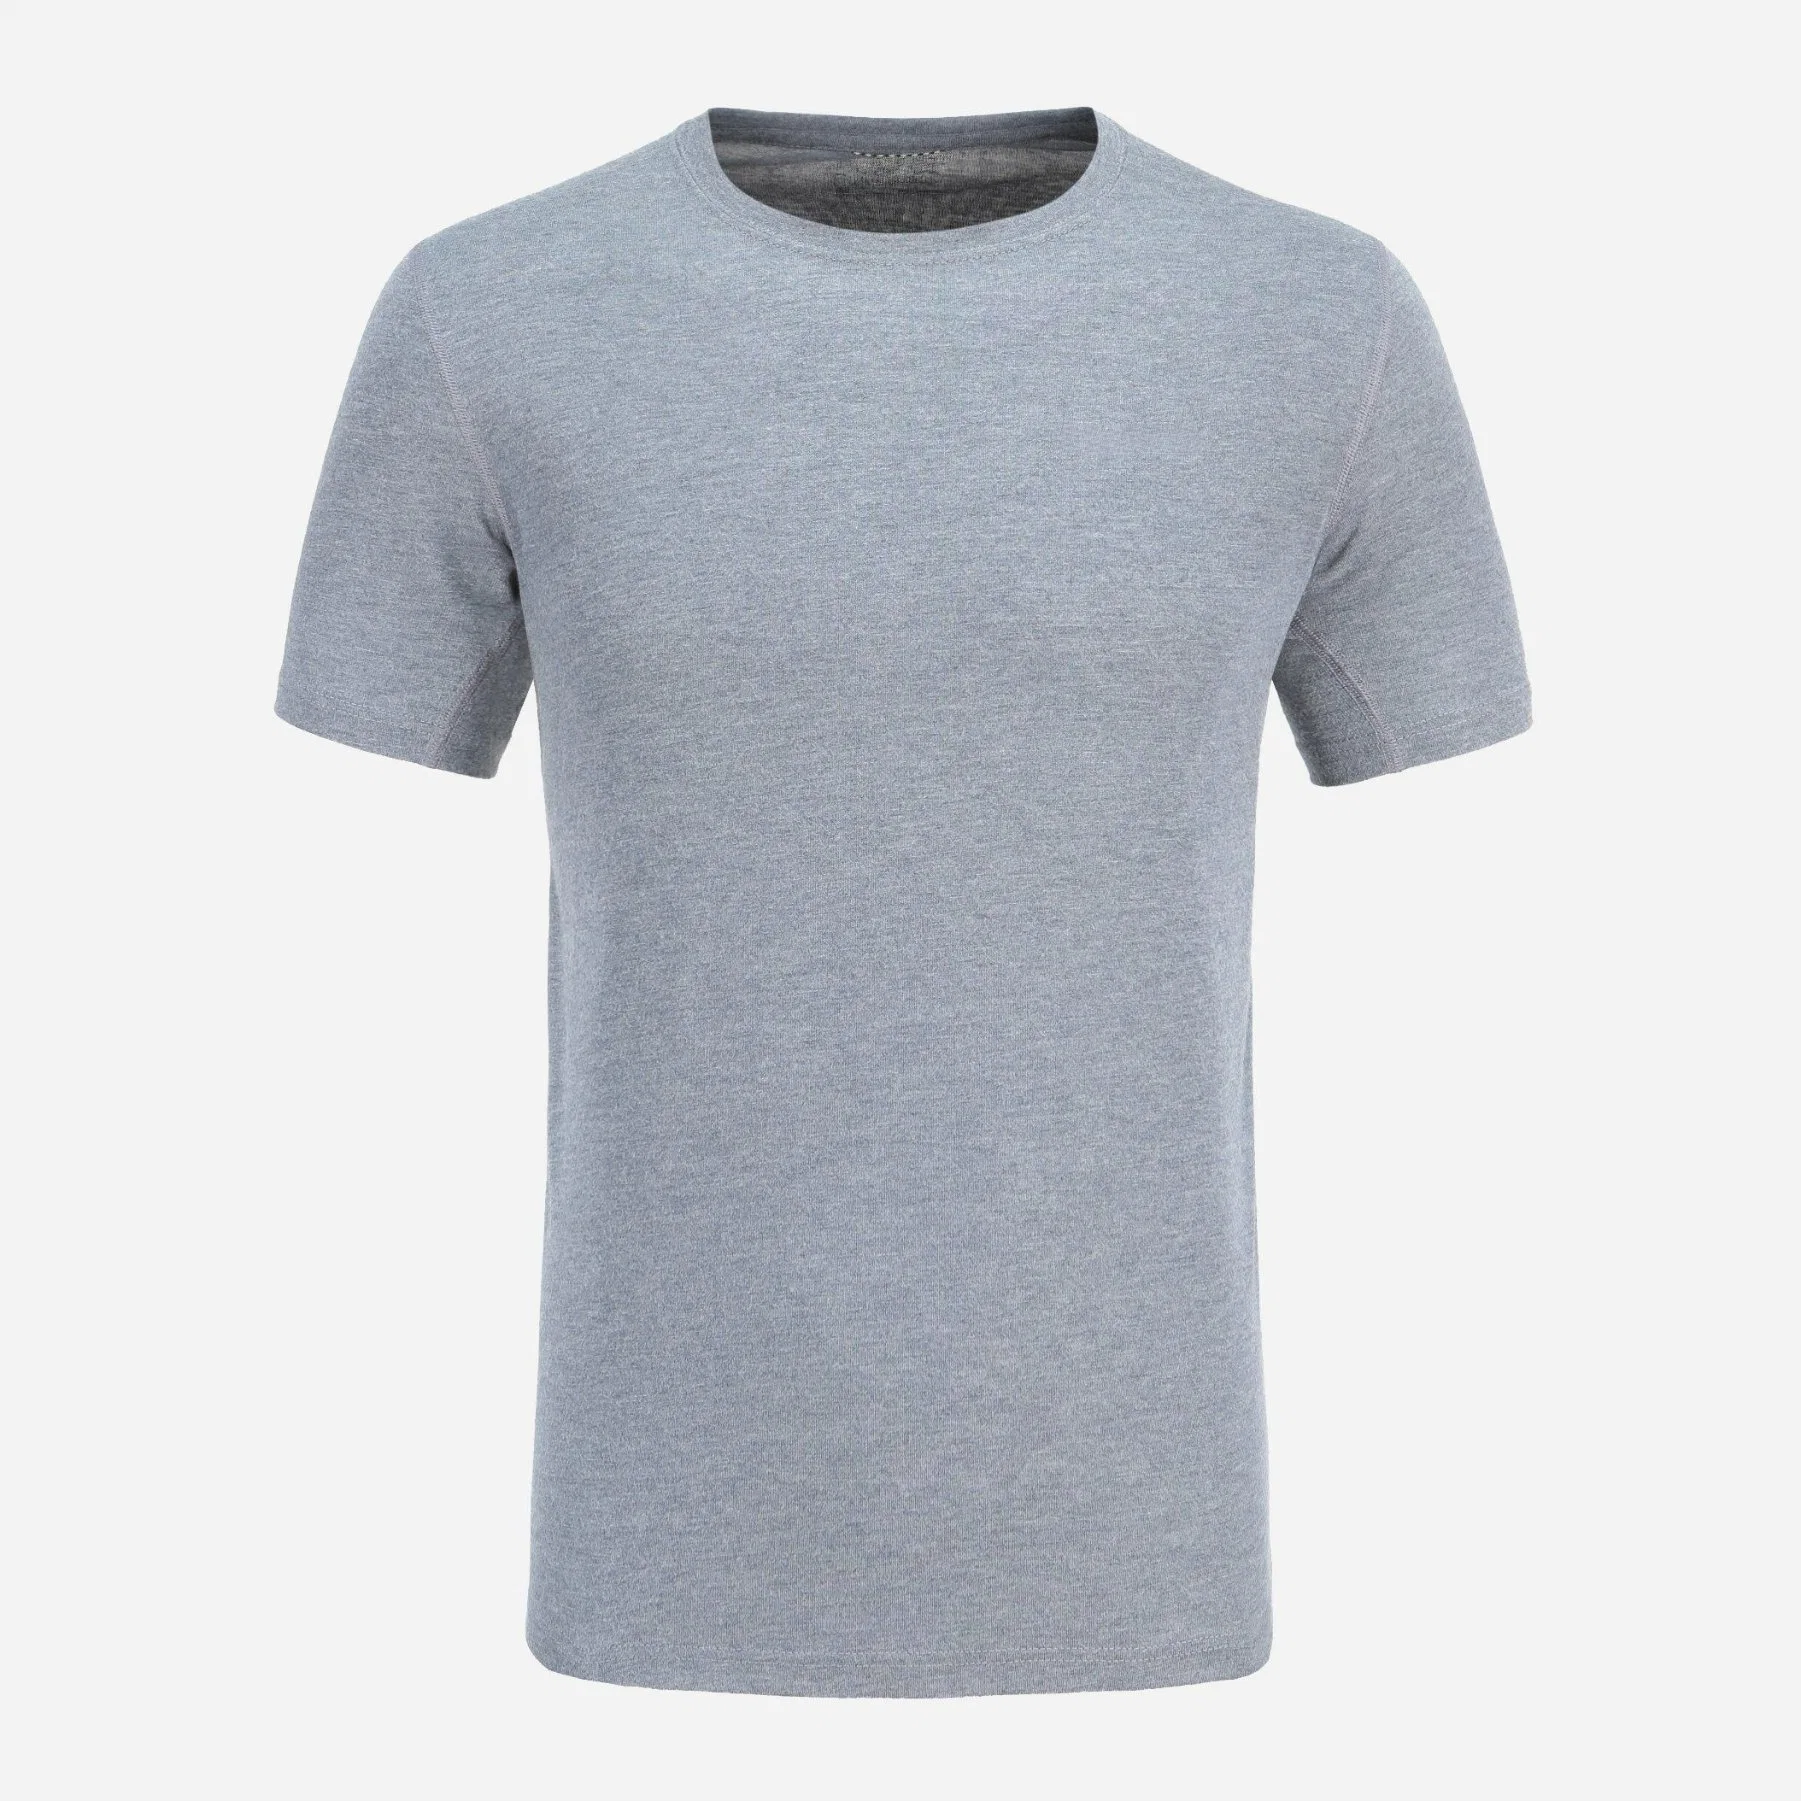 Classic Gray T-Shirt for Men